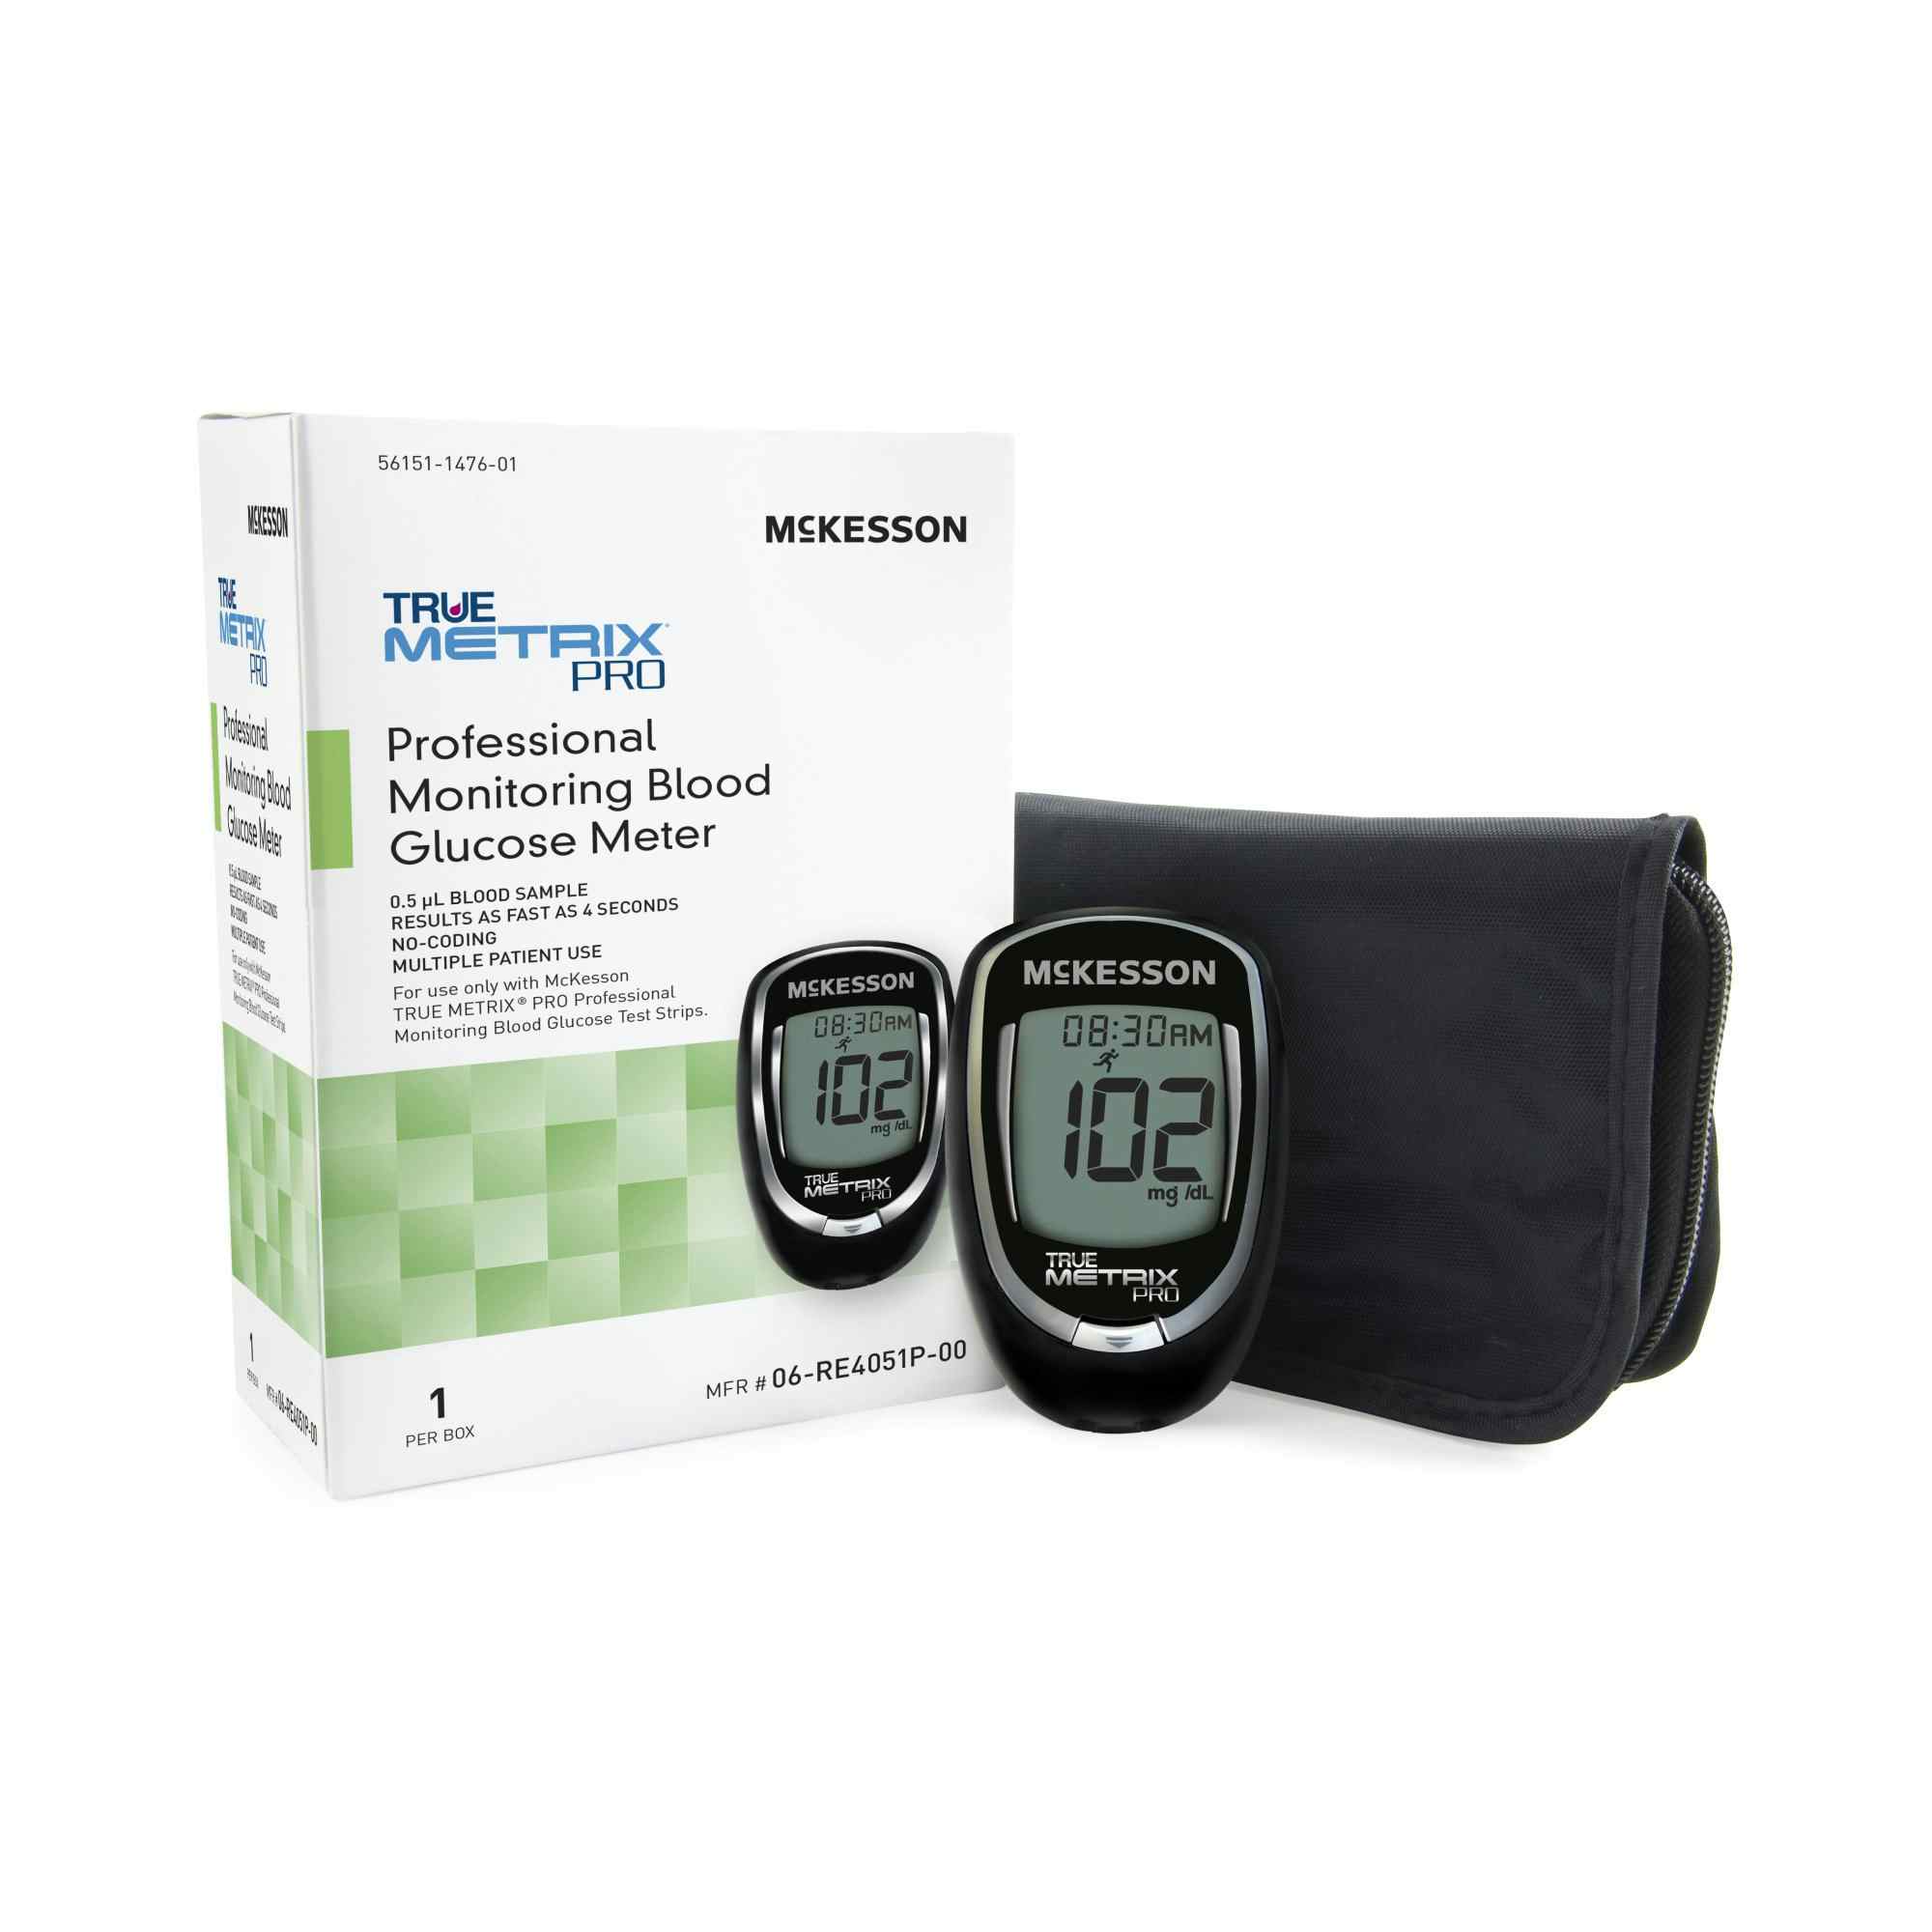 McKesson True Metrix Pro Professional Monitoring Blood Glucose Meter